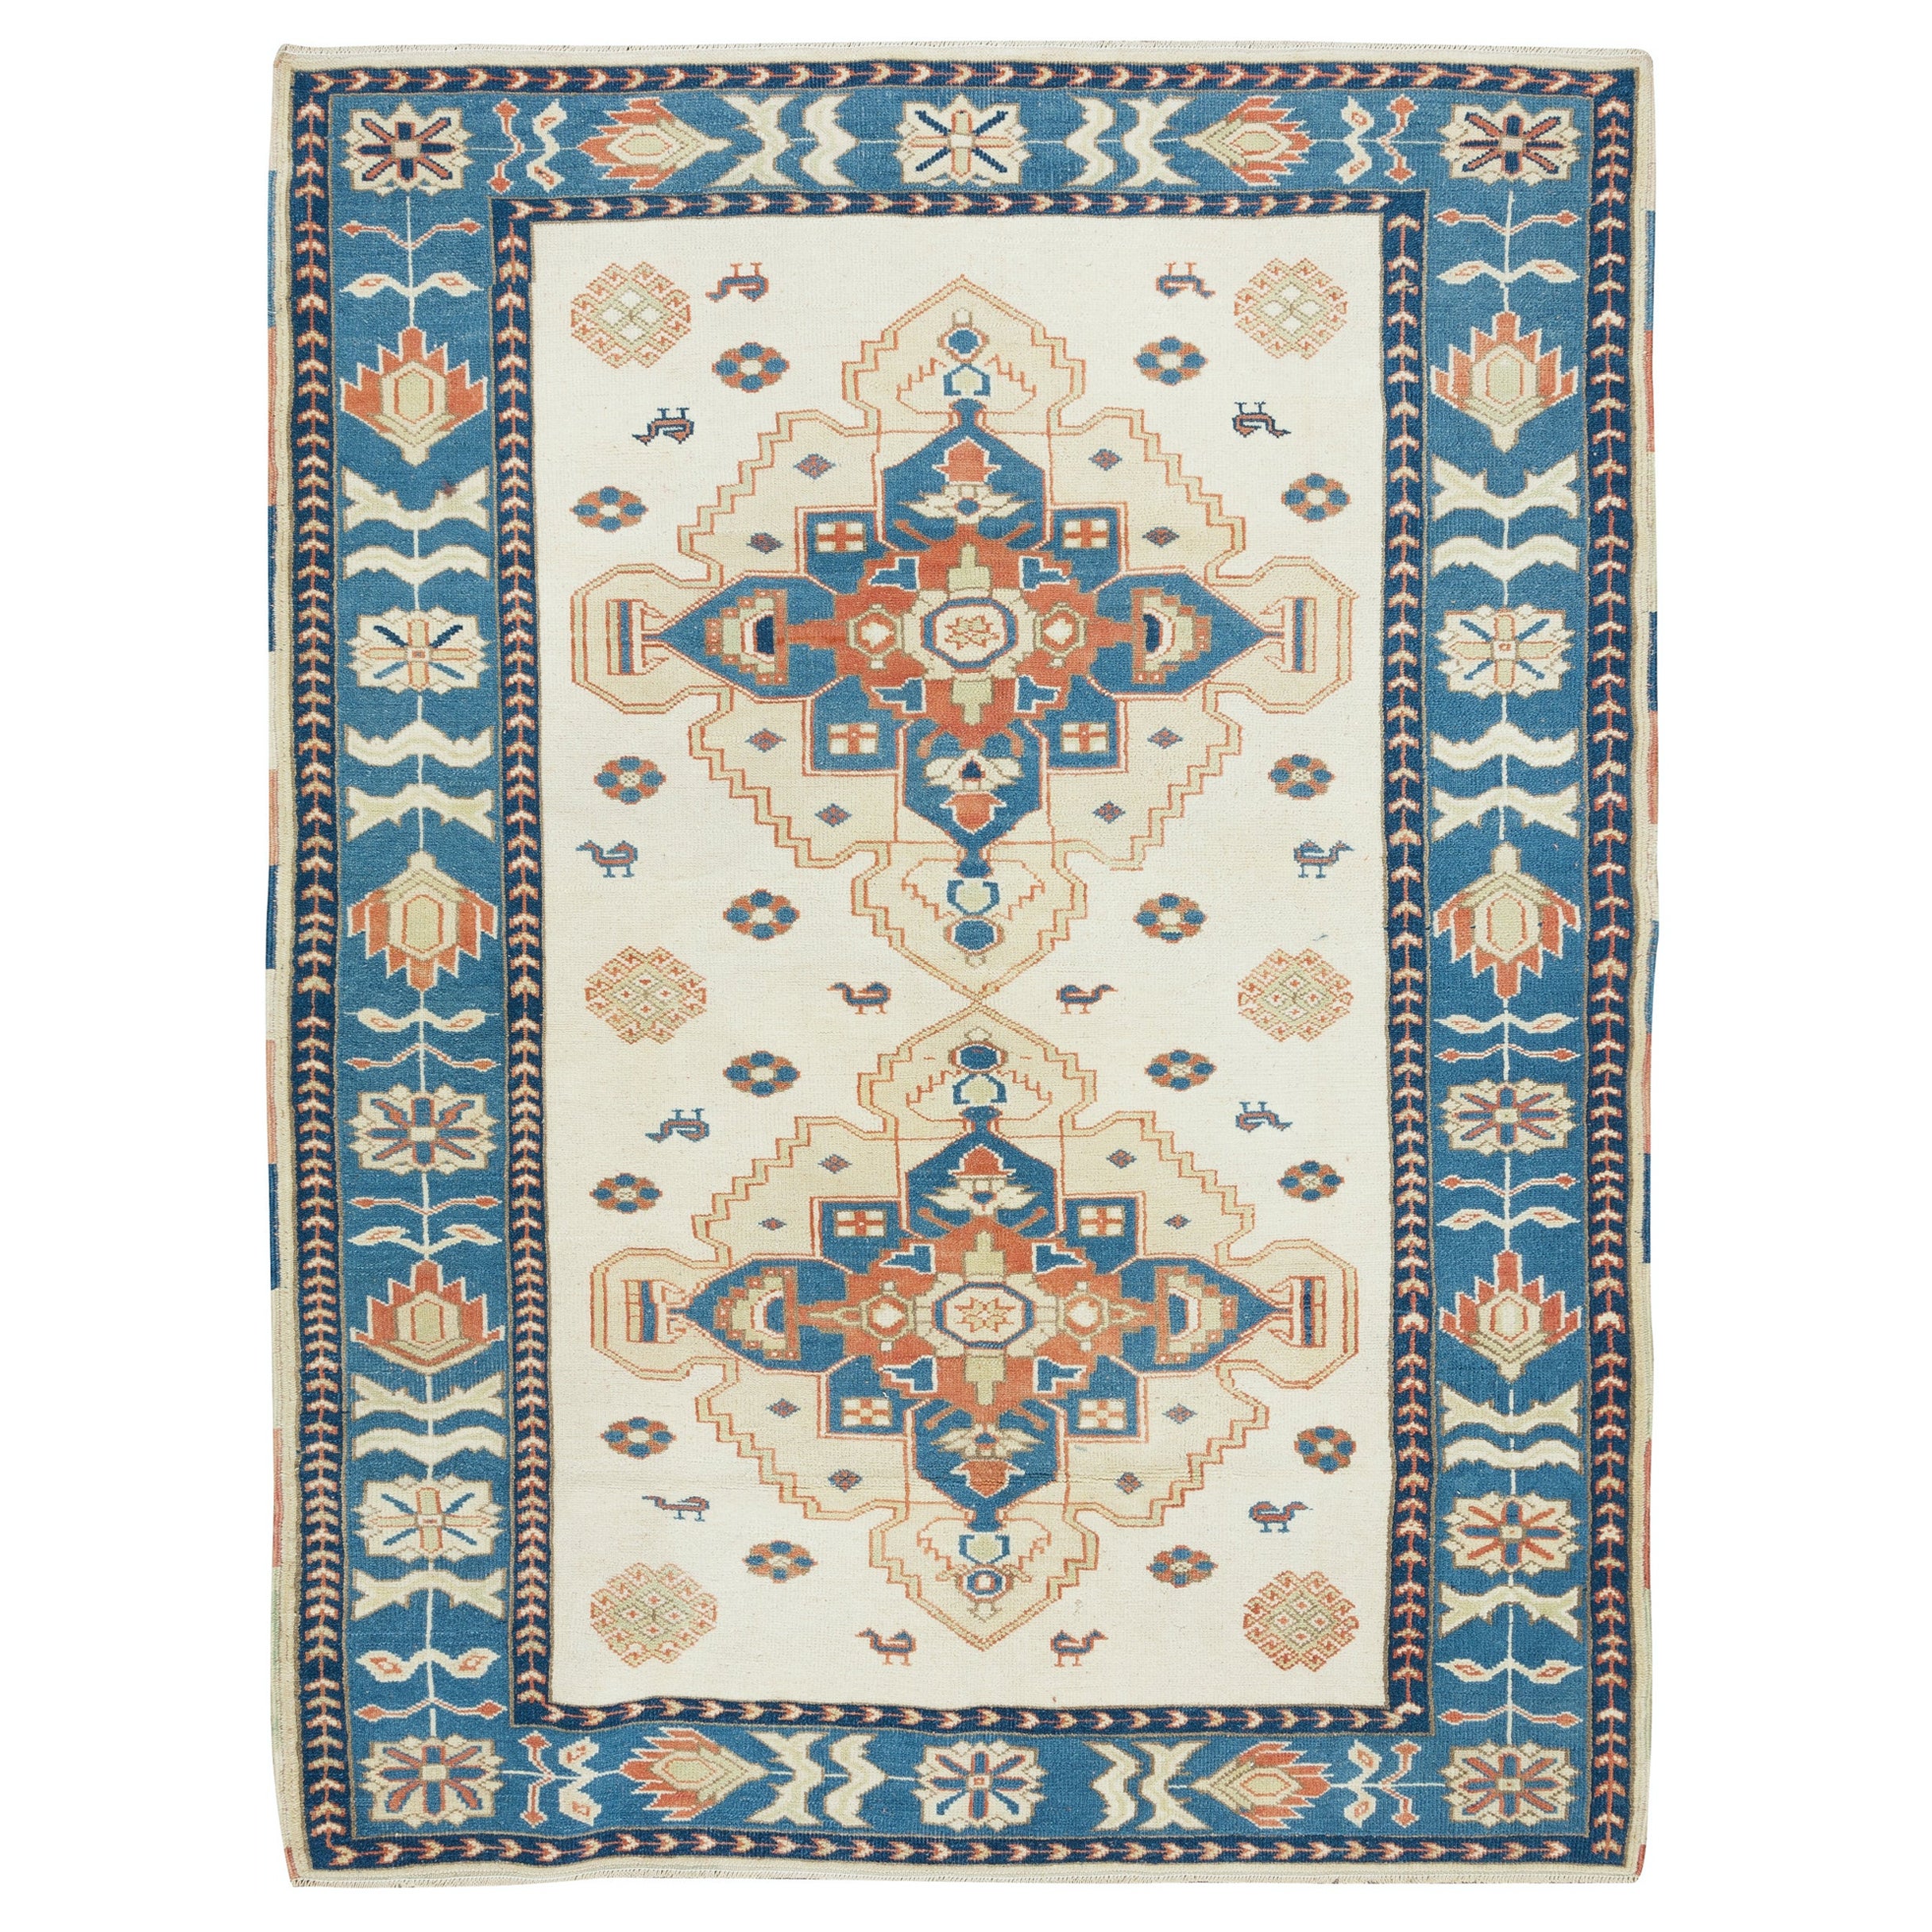 4.6x6.3 Ft New Turkish Wool Rug, Handmade Geometric Carpet in Beige and Blue